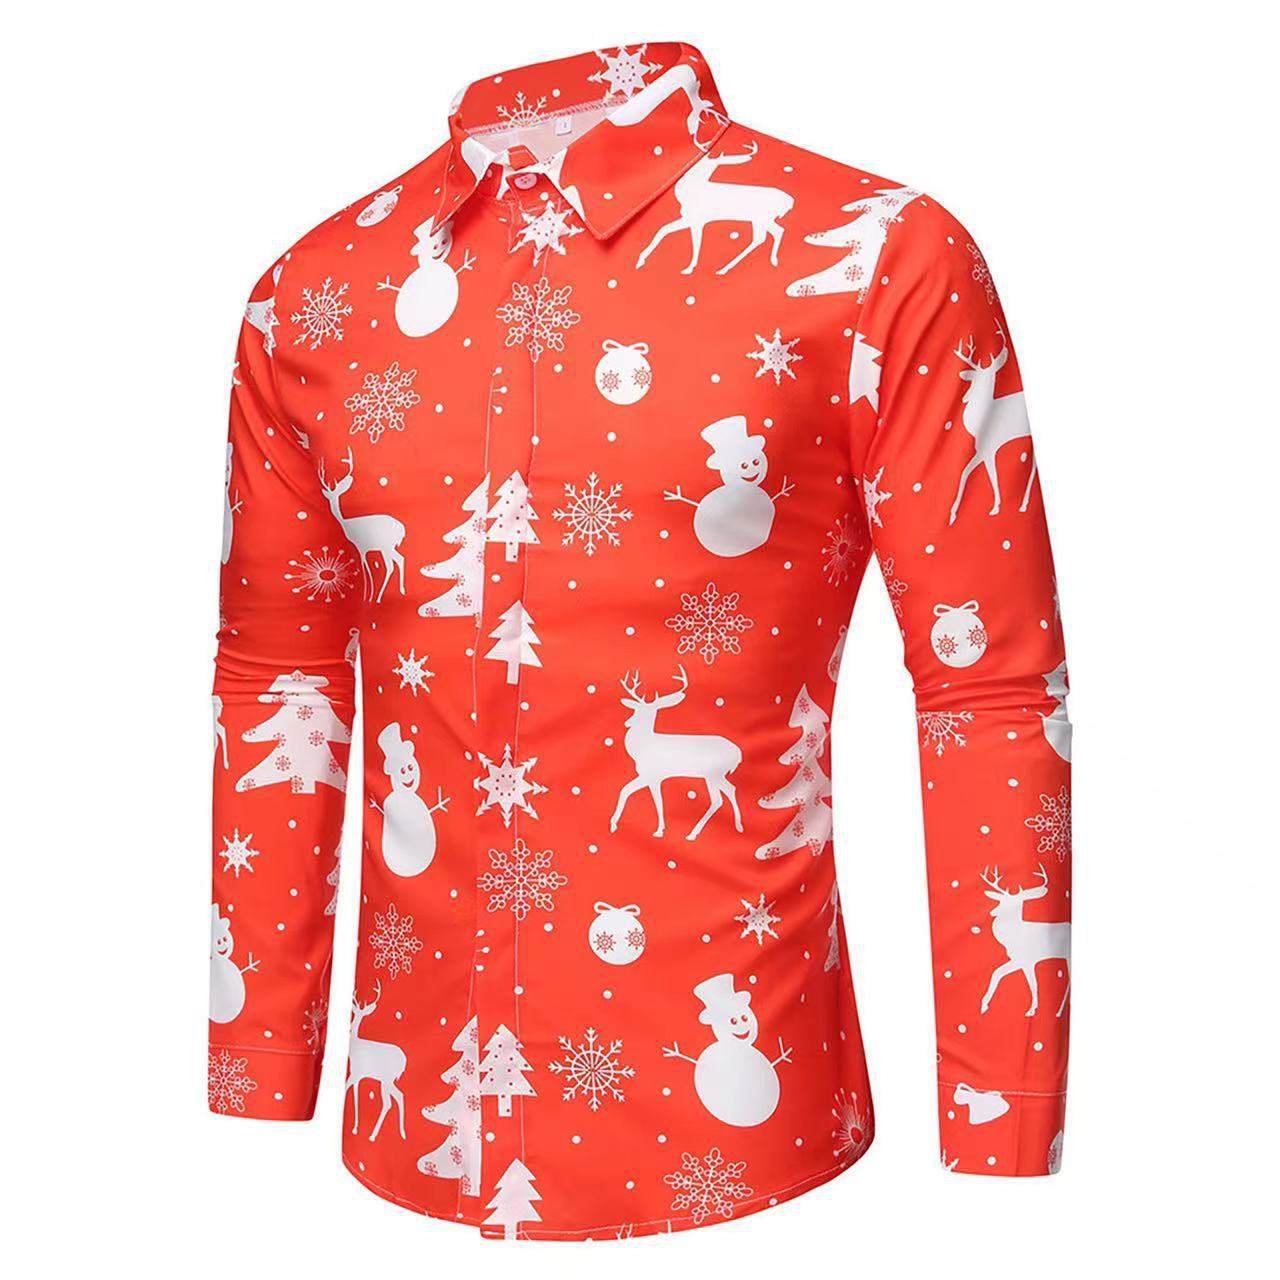 Santa's Island Getaway (Long Sleeves!): Spread holiday cheer in a festive, long-sleeve Hawaiian shirt featuring Christmas imagery.